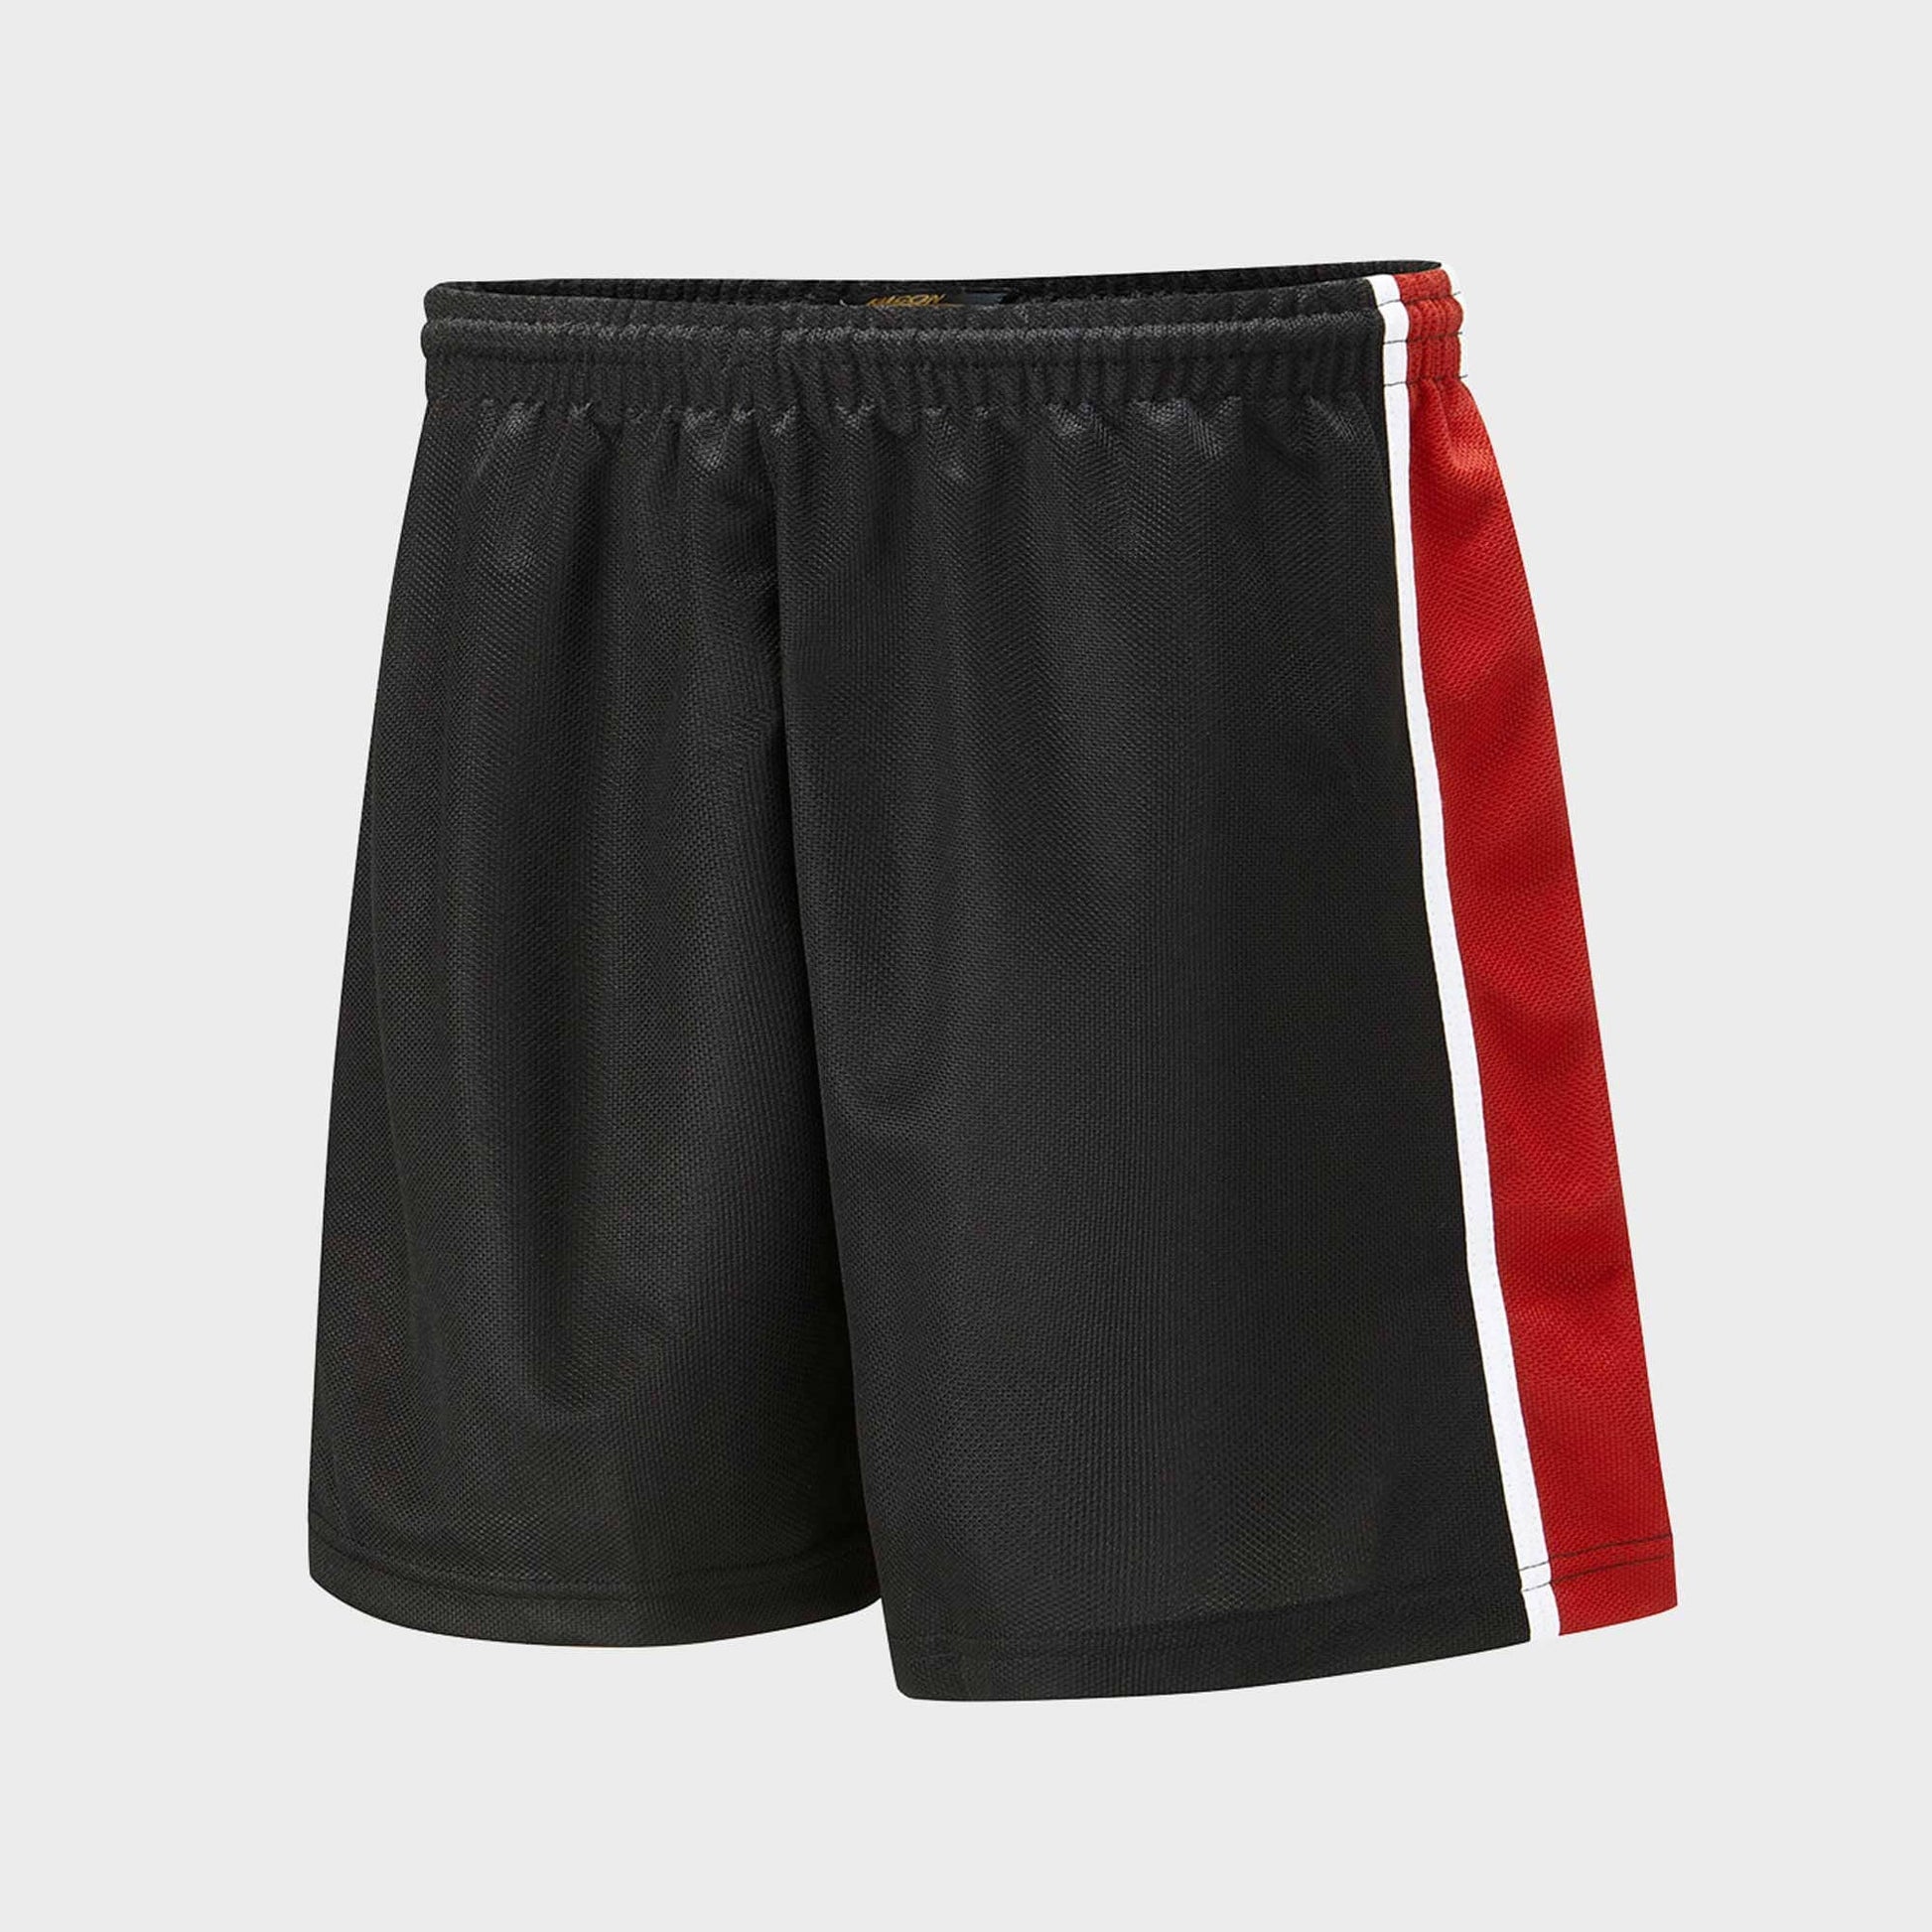 Falcon Men's Activewear Side Panel Shorts Men's Shorts HAS Apparel Black & Red XS 